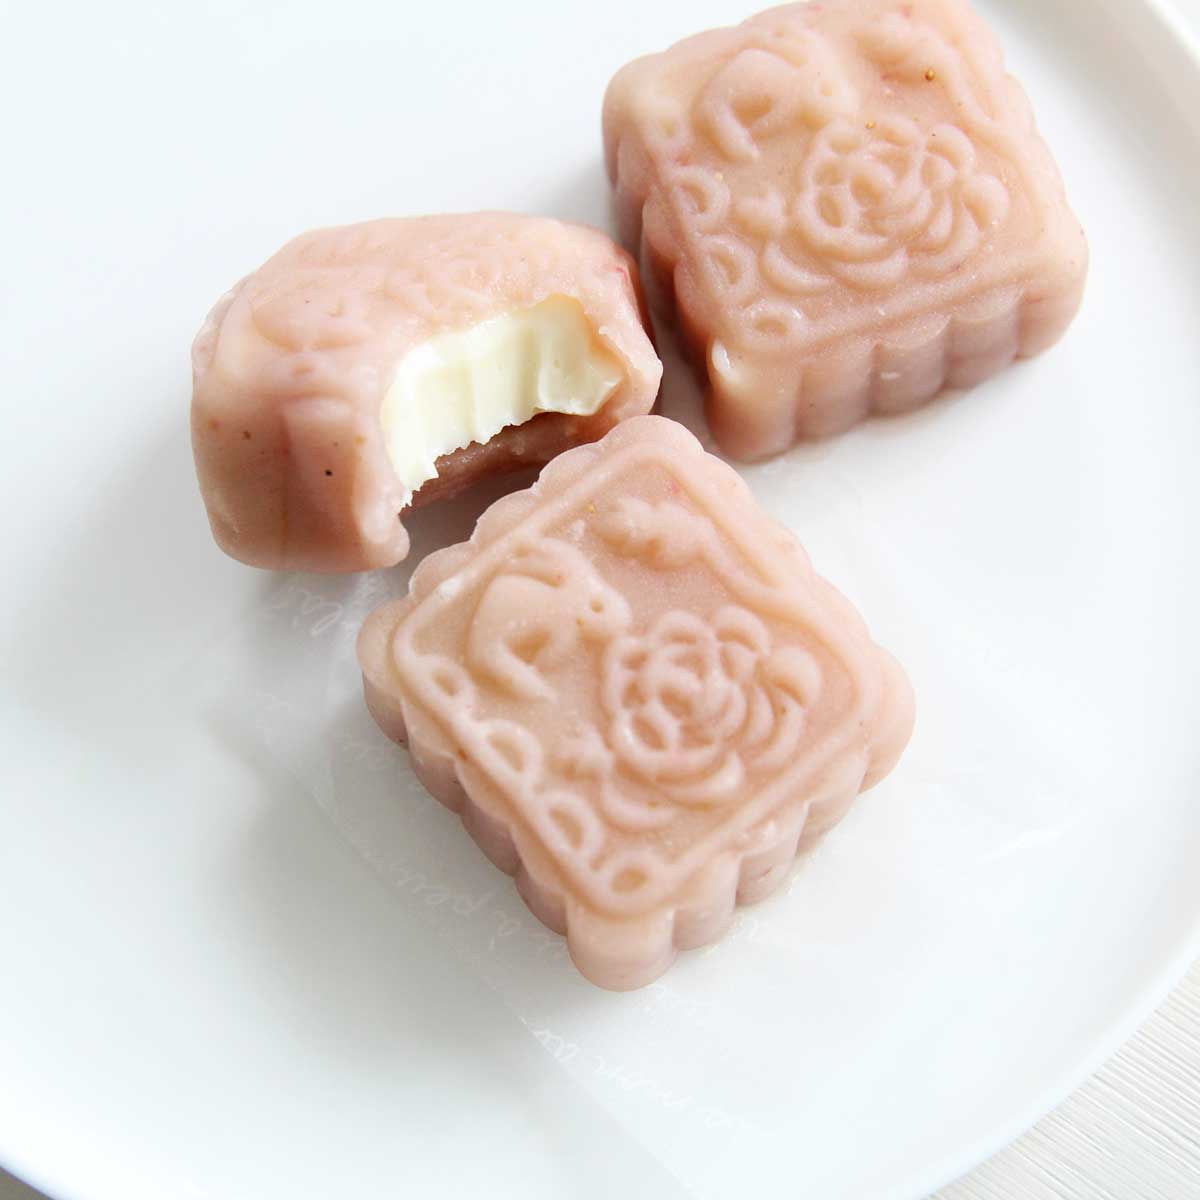 Strawberry Snow Skin Mooncakes (Vegan, Gluten Free Recipe) - Strawberry Japanese Roll Cake